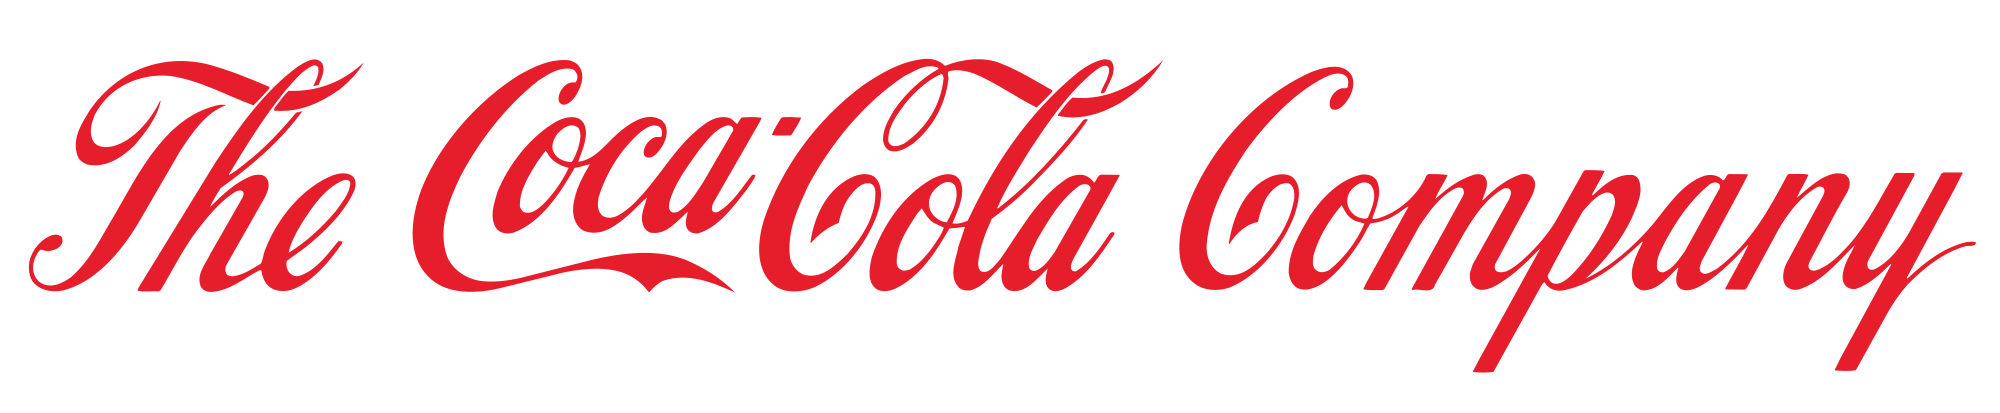 File:Cocacola caffeinefree logo.png - Wikipedia